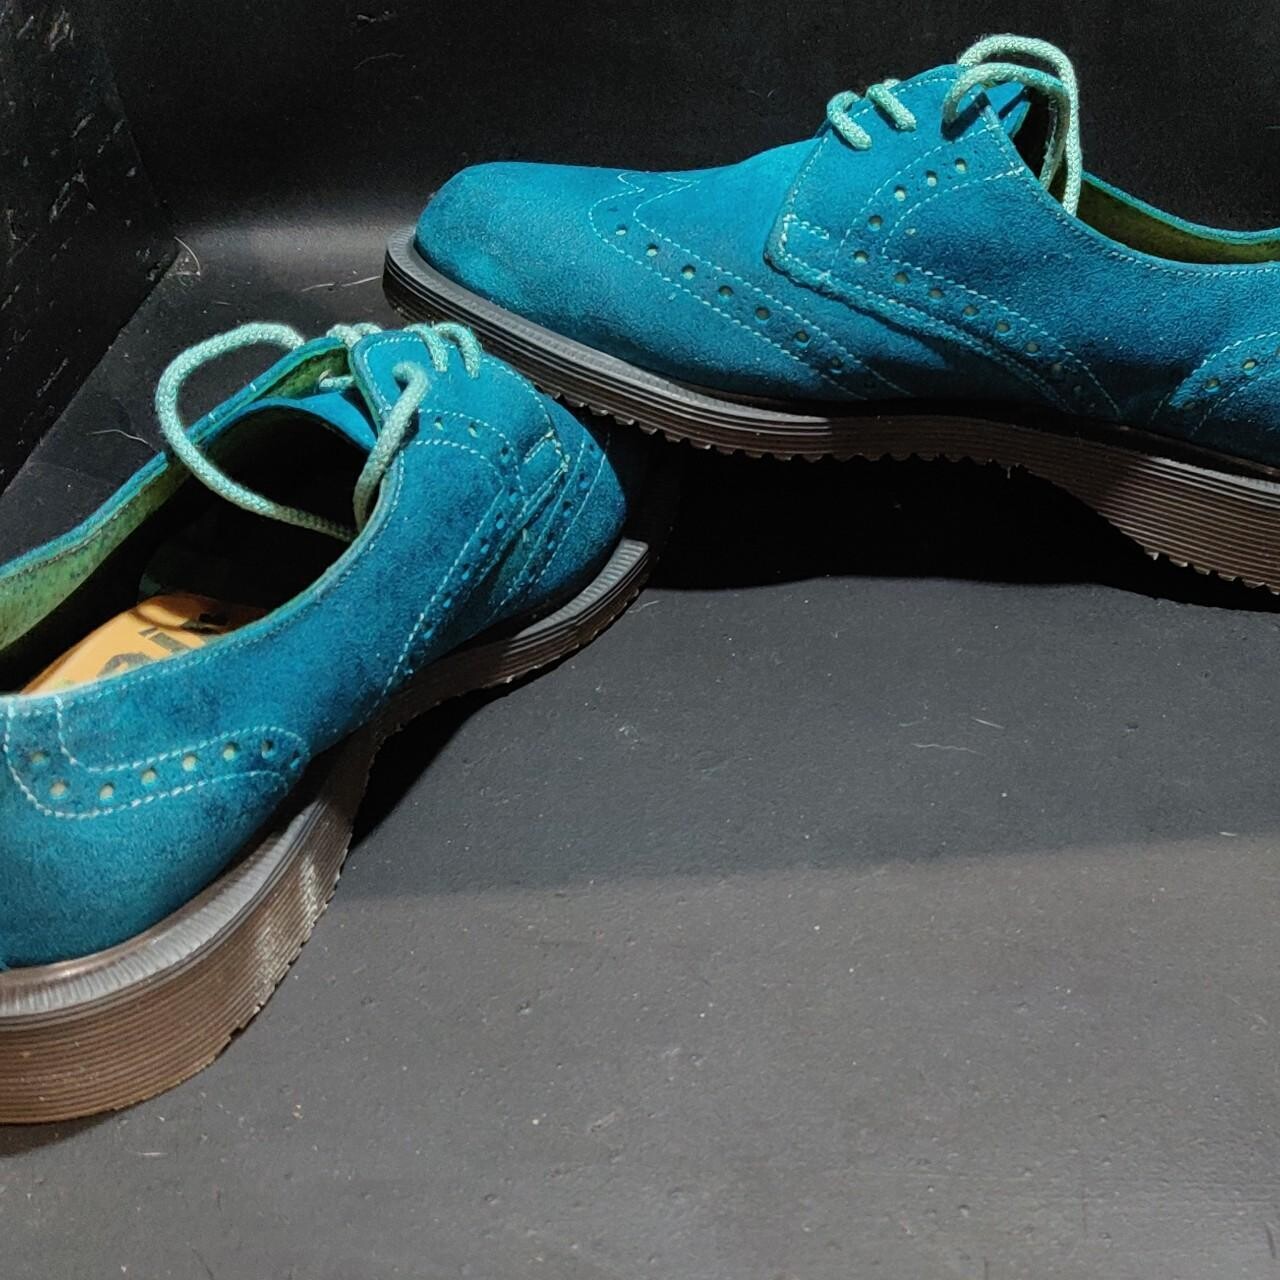 Doc Martens Airwair shoes in Bermuda Blue in a UK Size 4